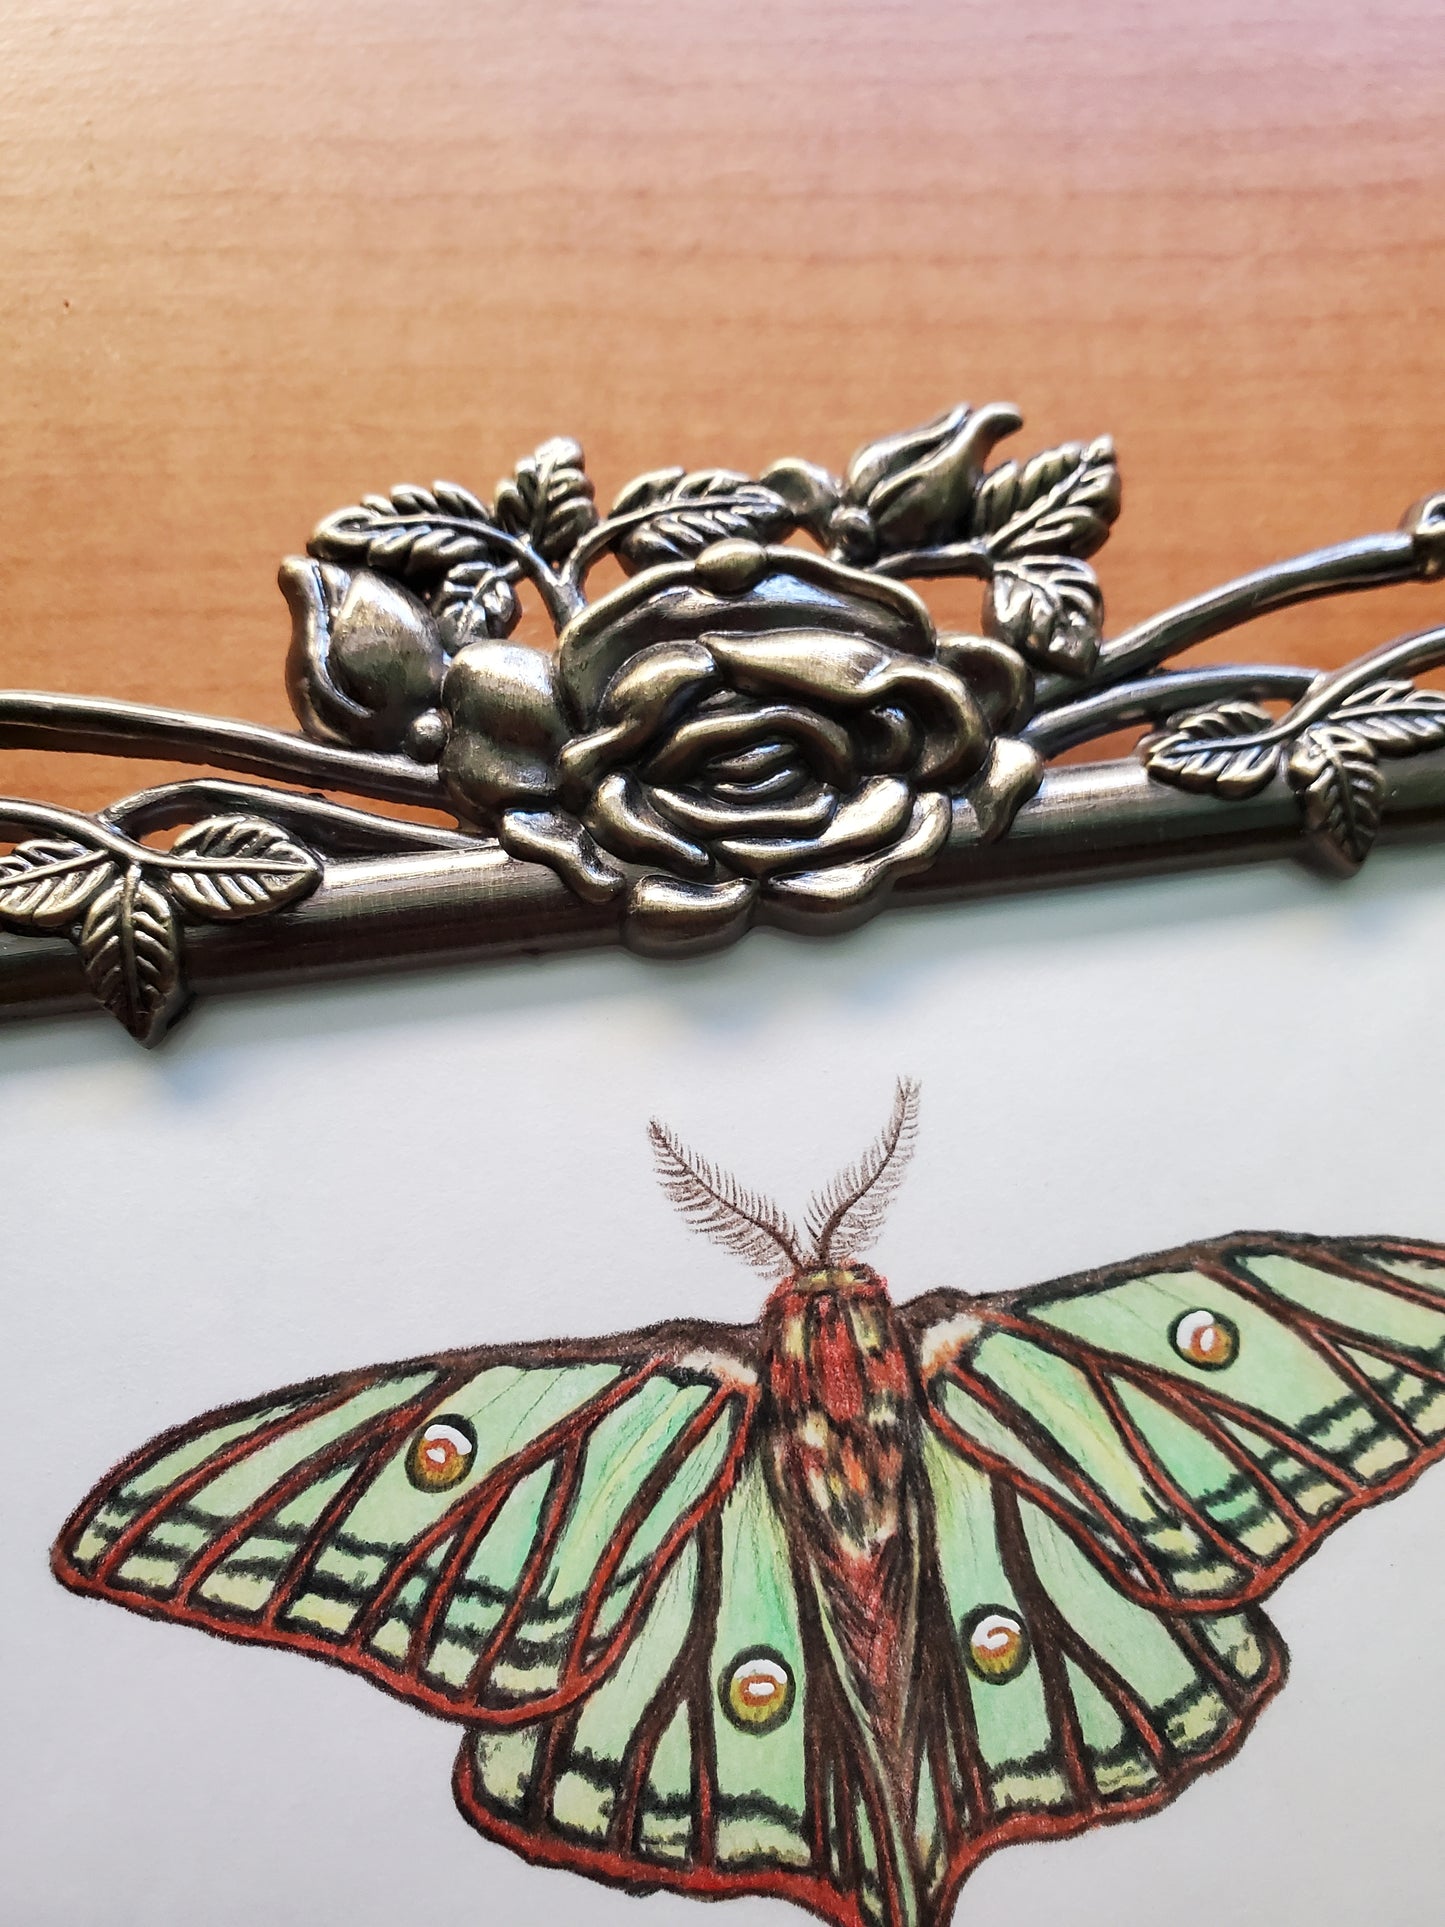 Moon Moths Drawing in Vintage Rose Frame